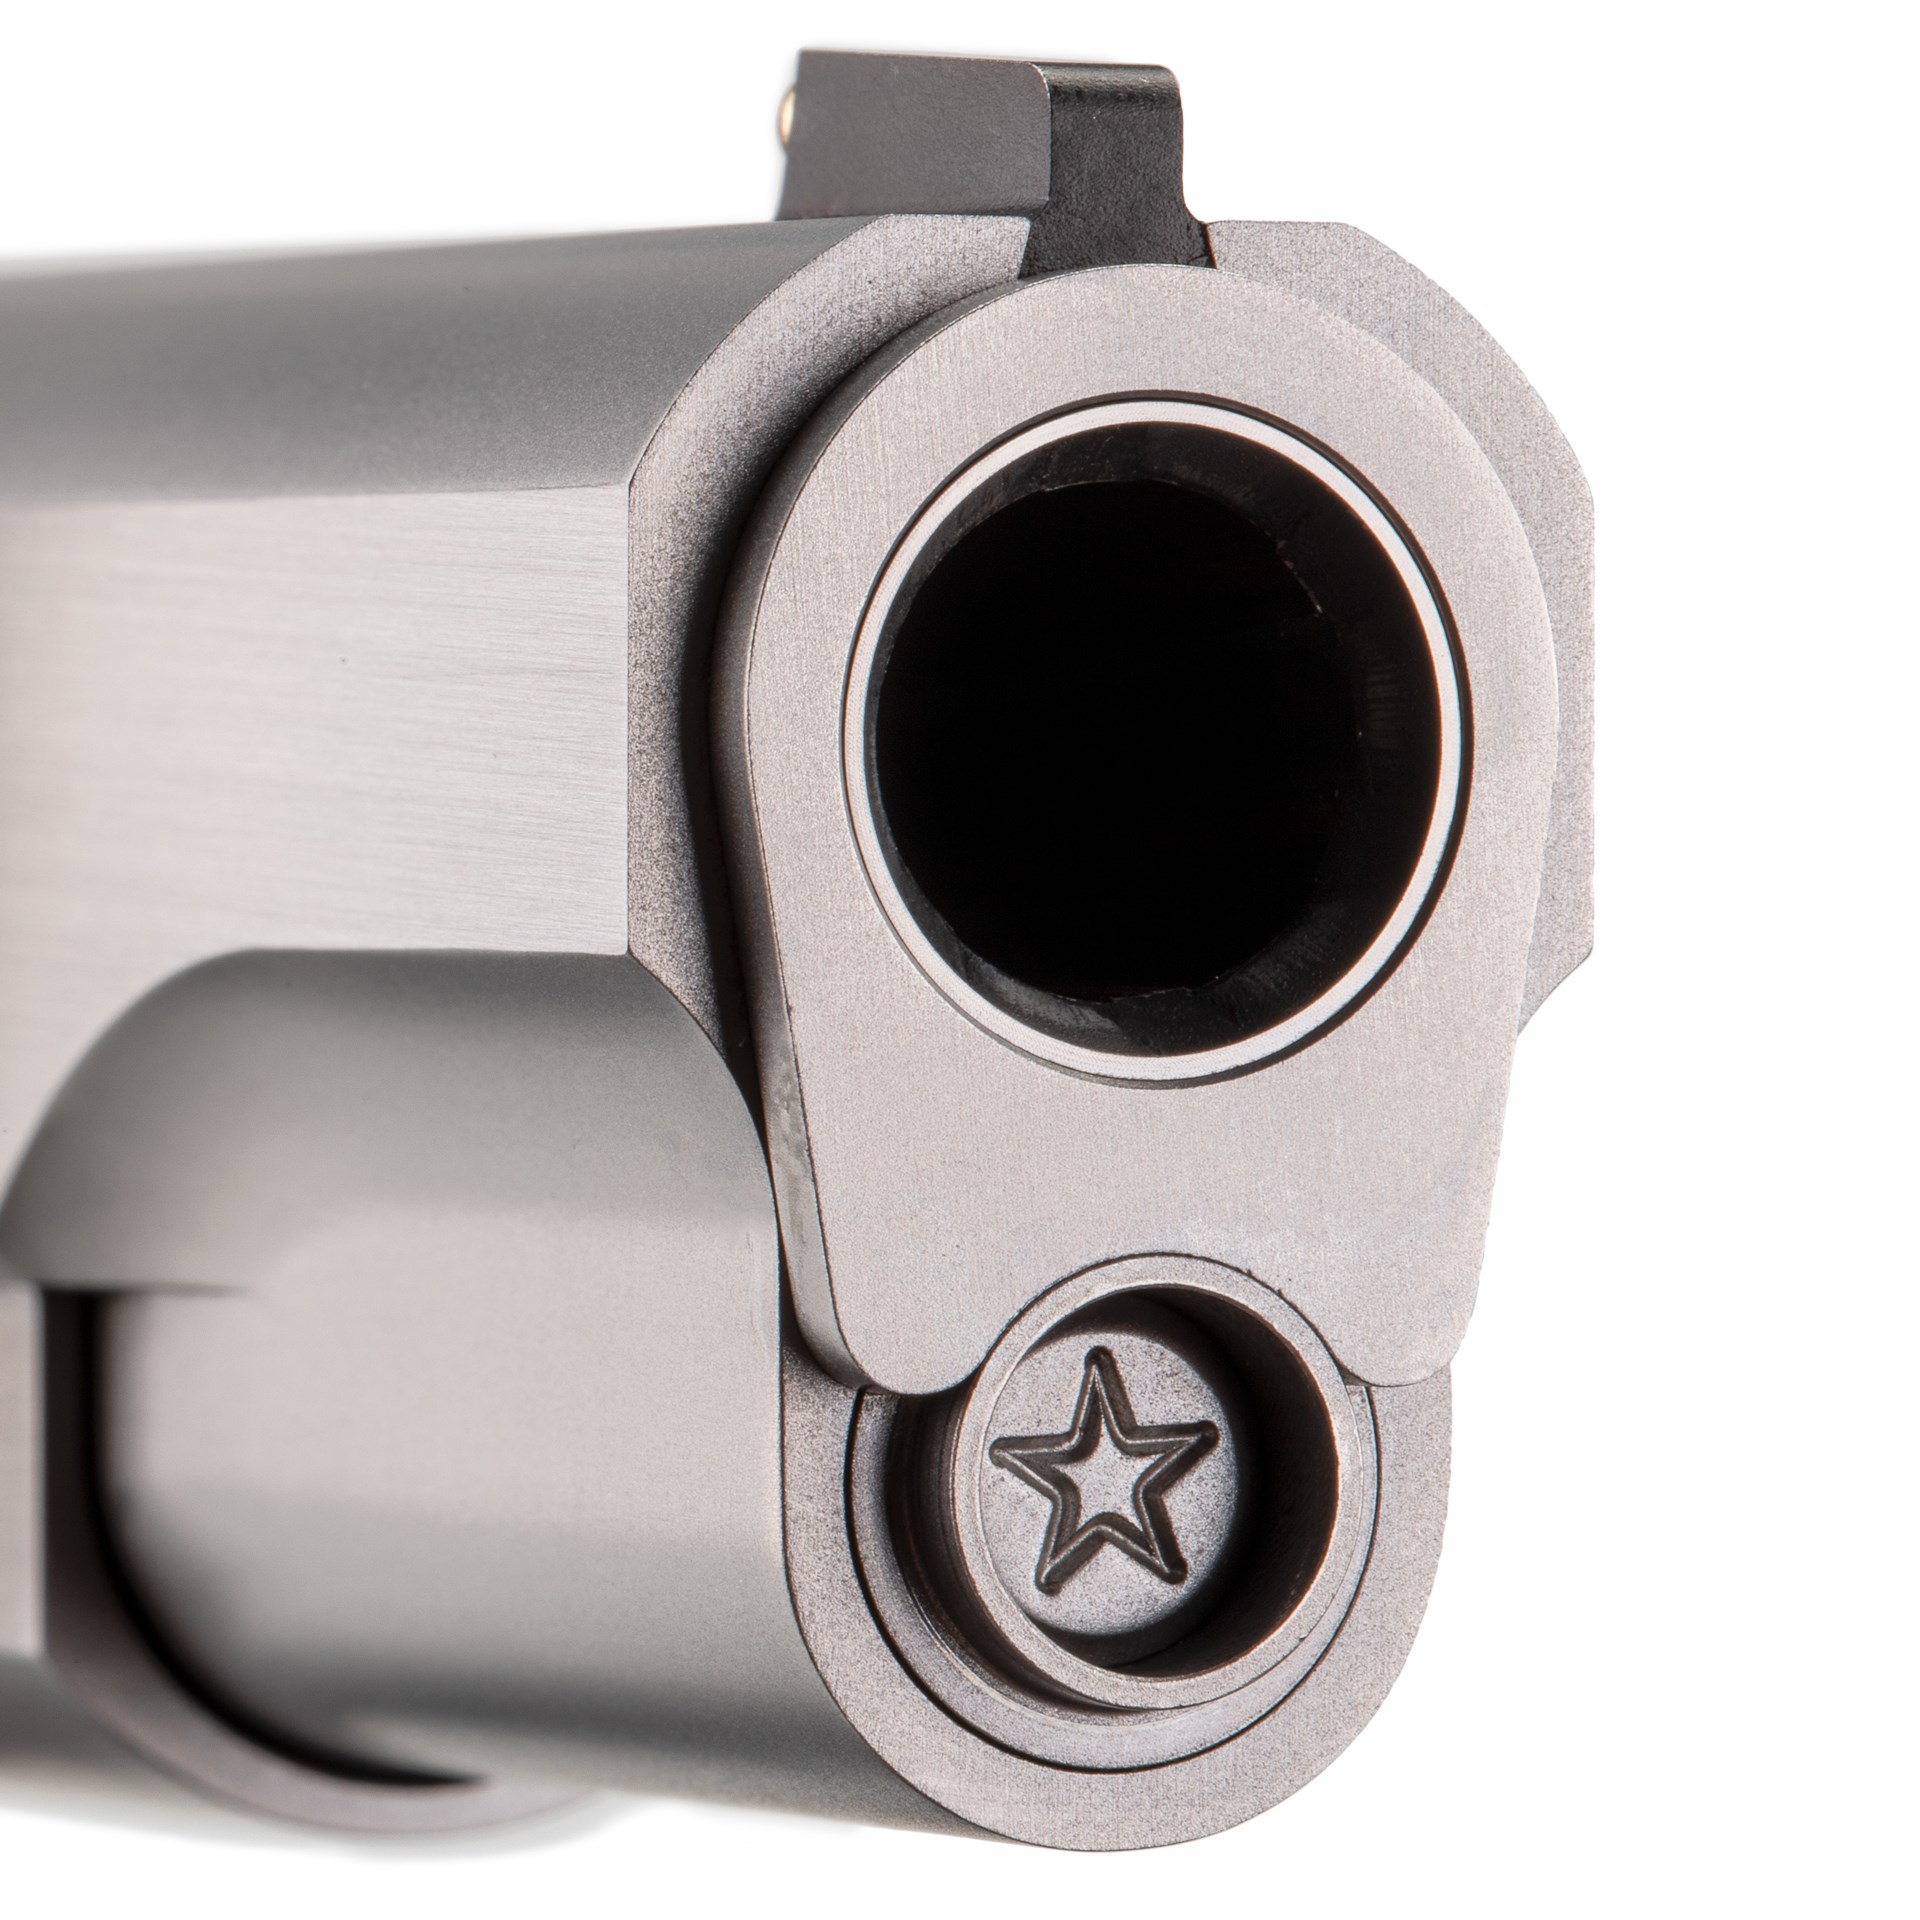 Cabot Guns Southpaw 1911 barrel closeup detail pistol gun slide sight star plug bushingmetal stainless steel